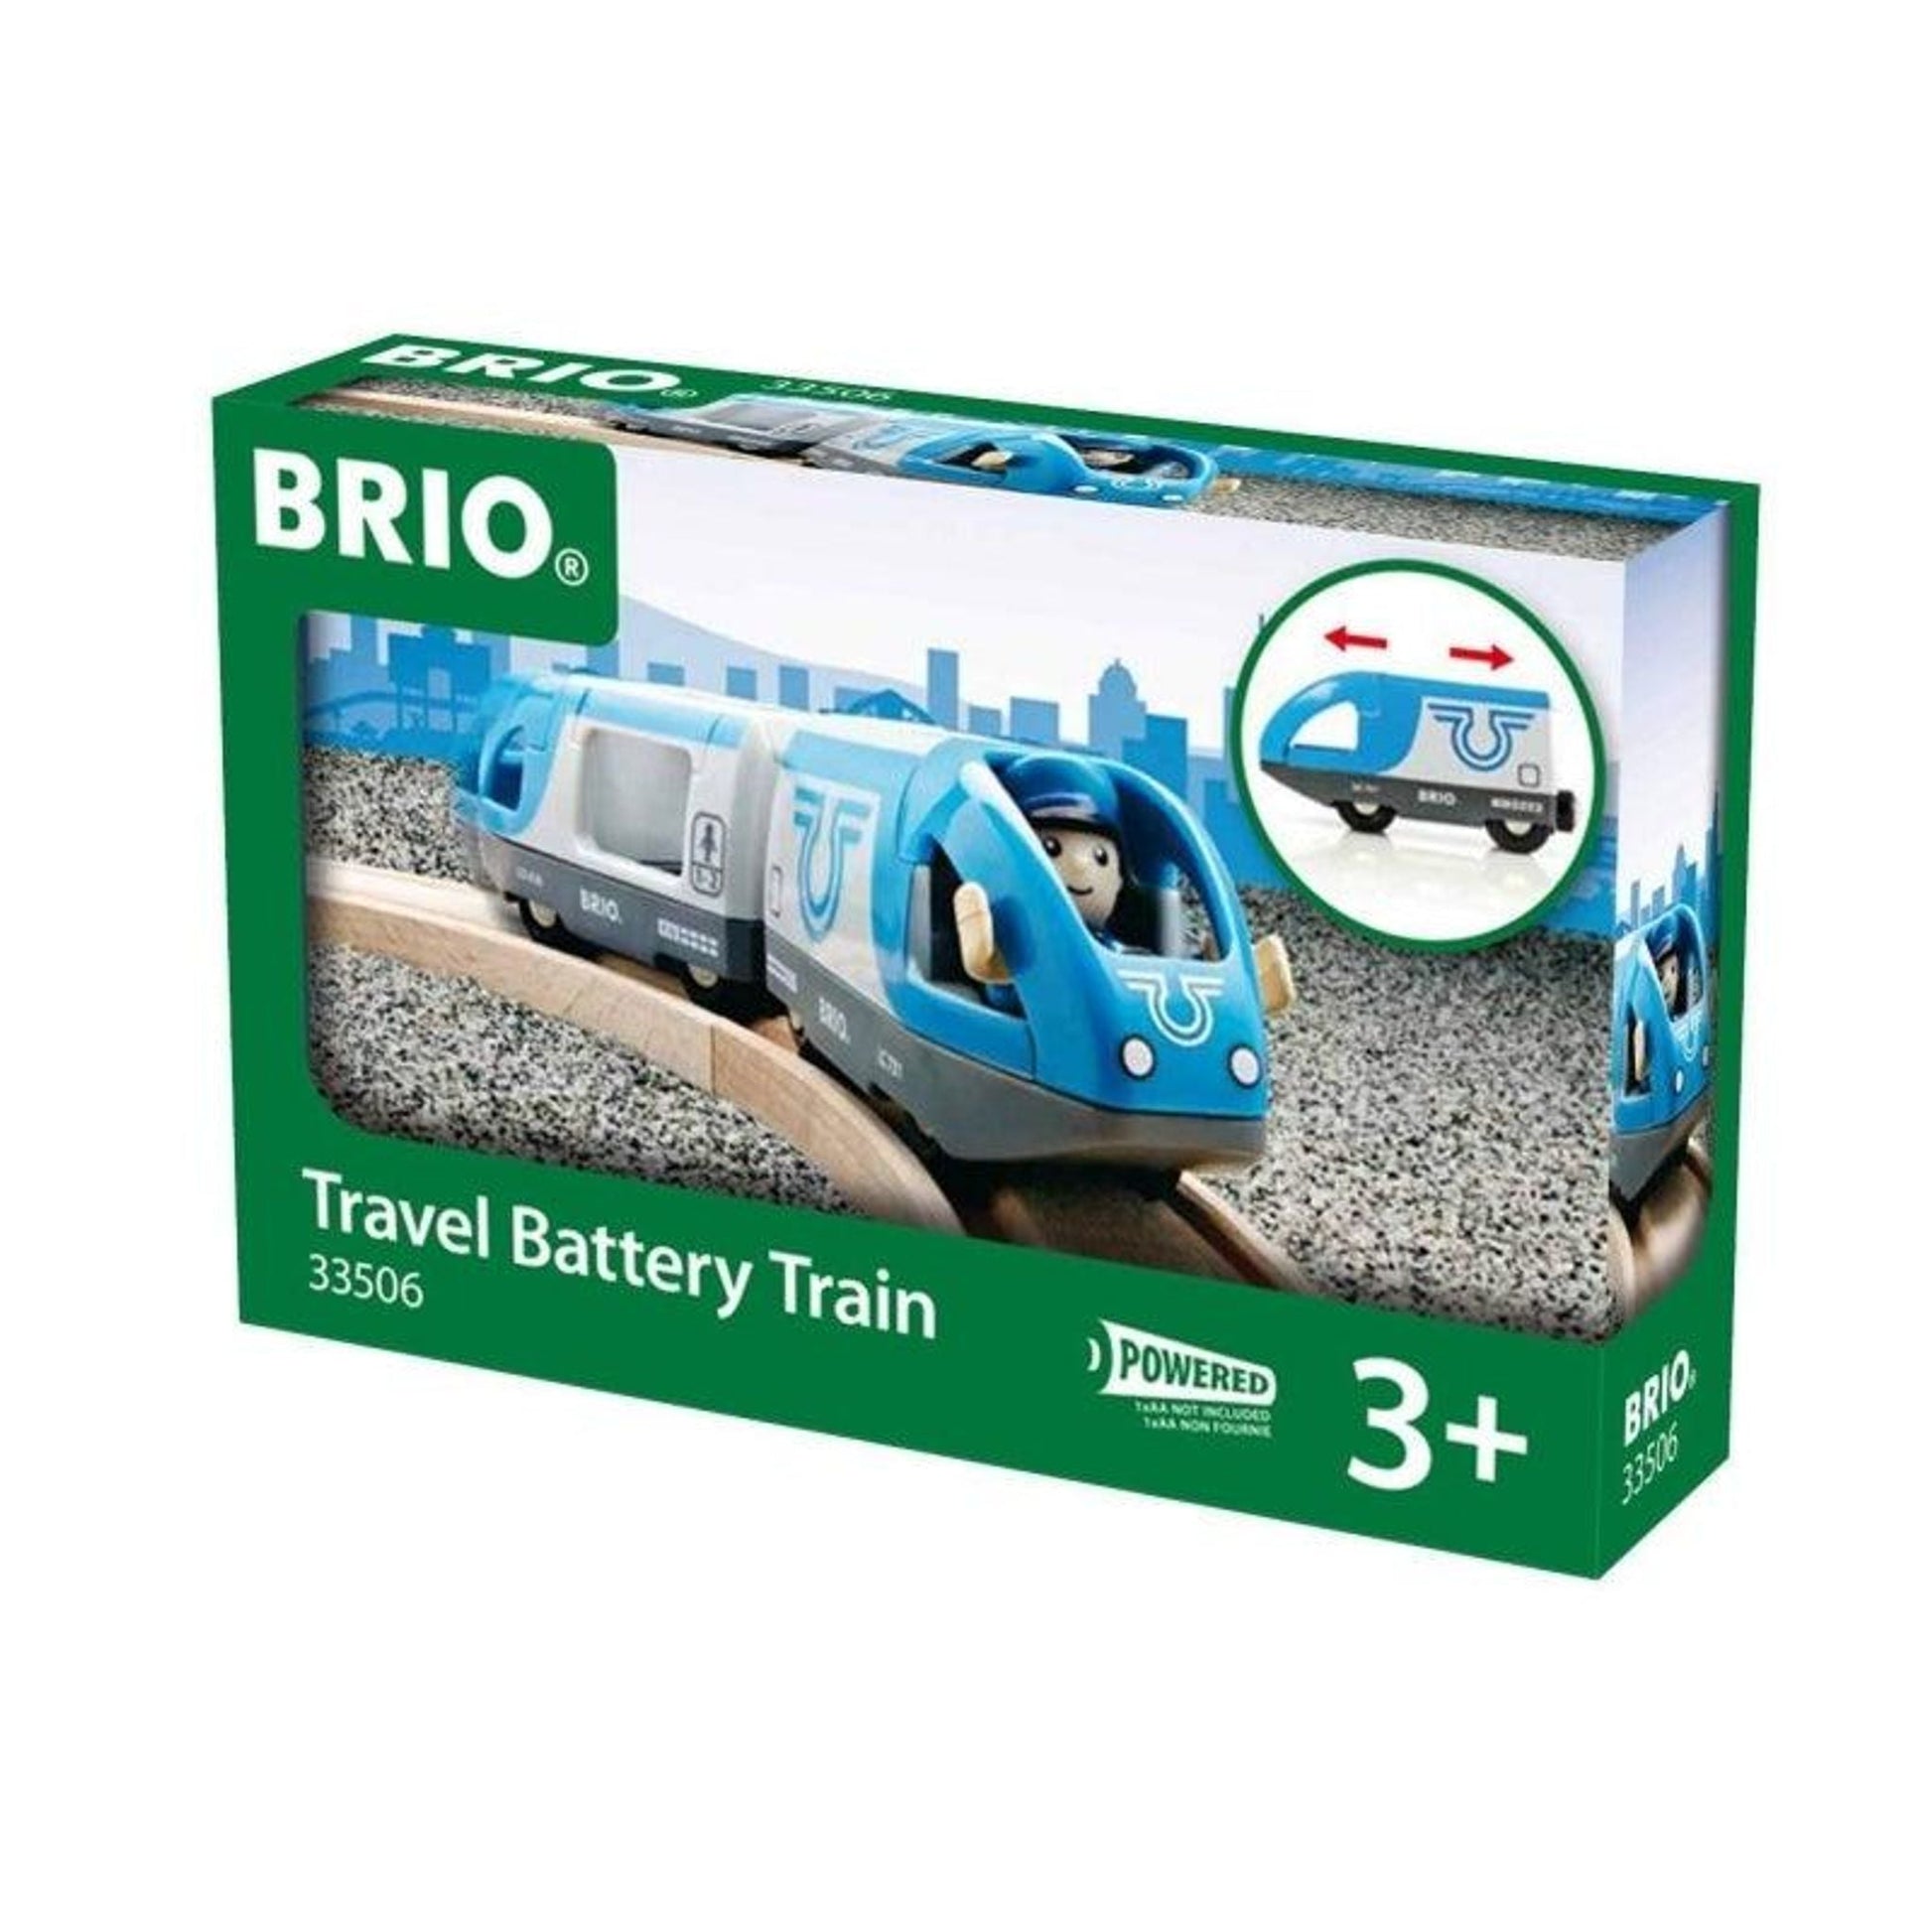 BRIO BO - Travel Battery Train 3 pieces - Toybox Tales